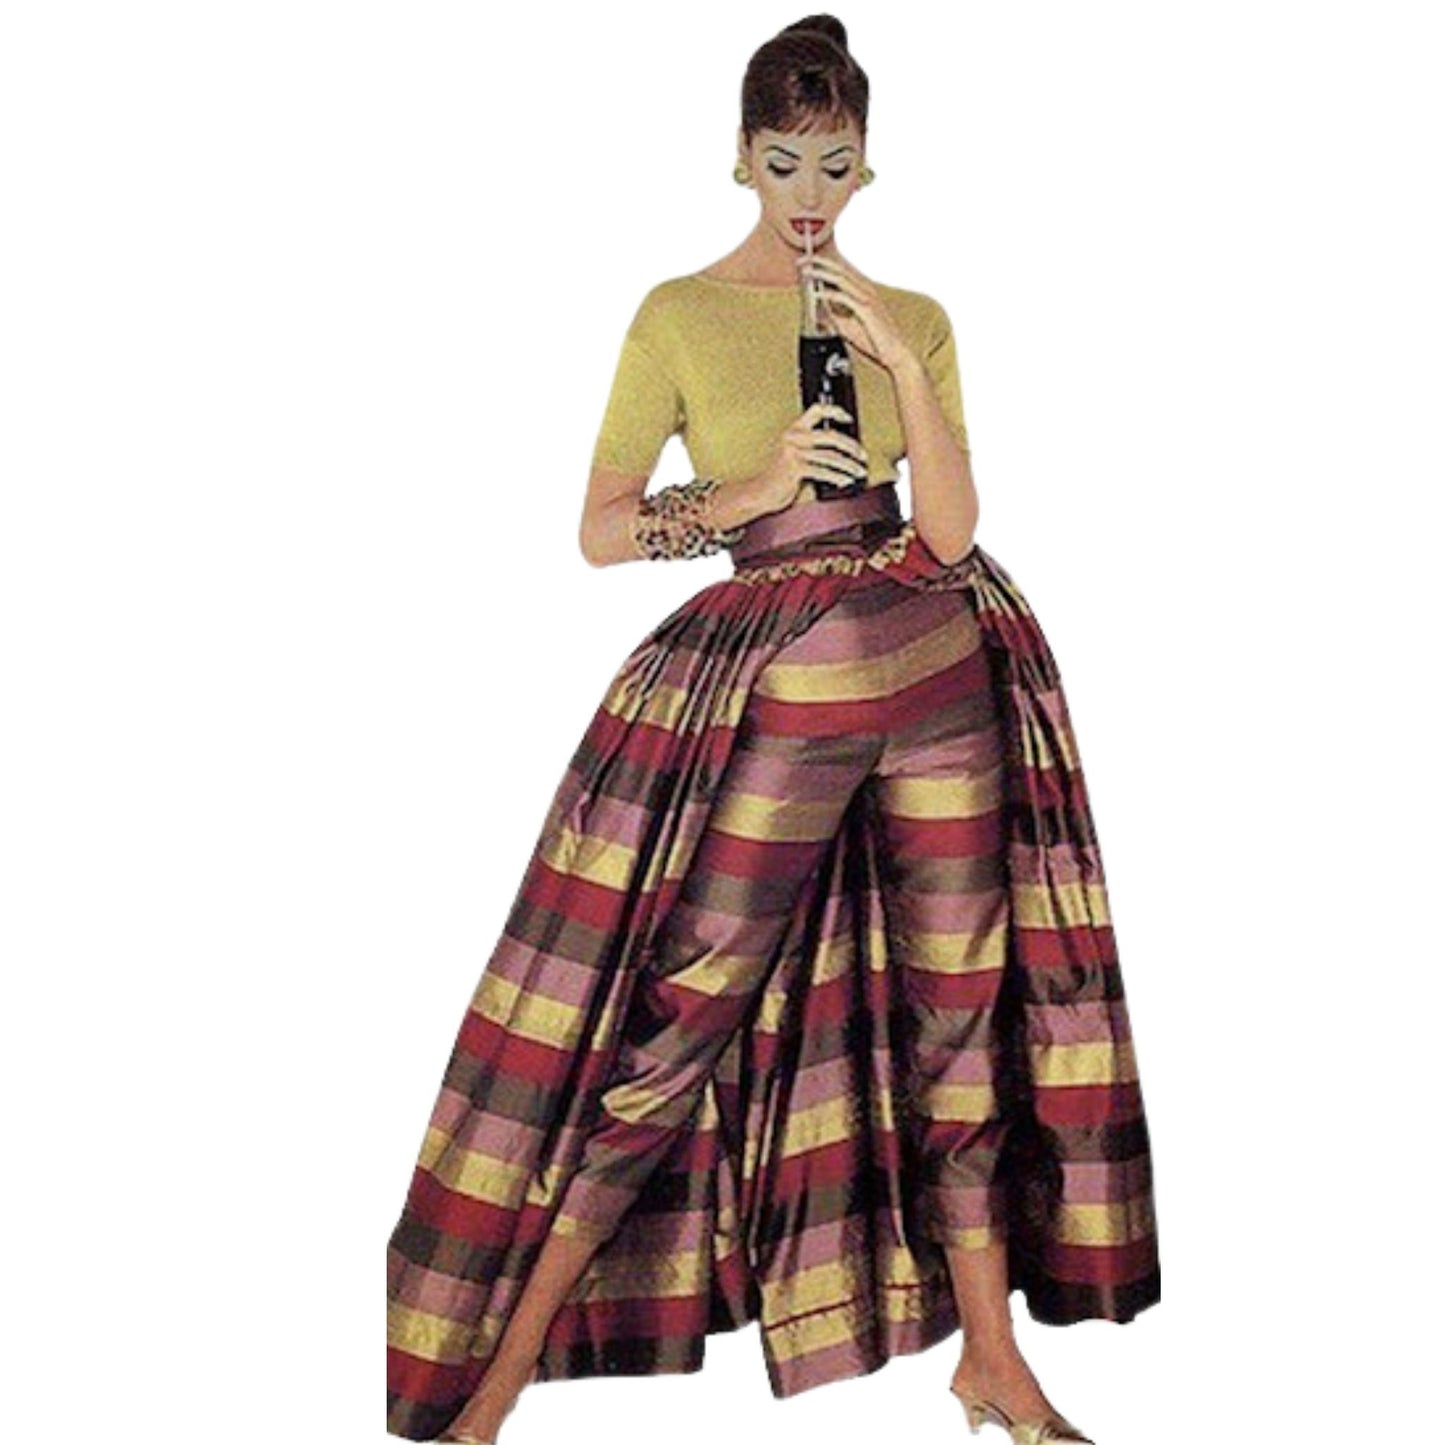 Vintage 1950s Sewing Pattern – Pants, Blouse & Over-skirt Set - Bust 34” (86.4cm)